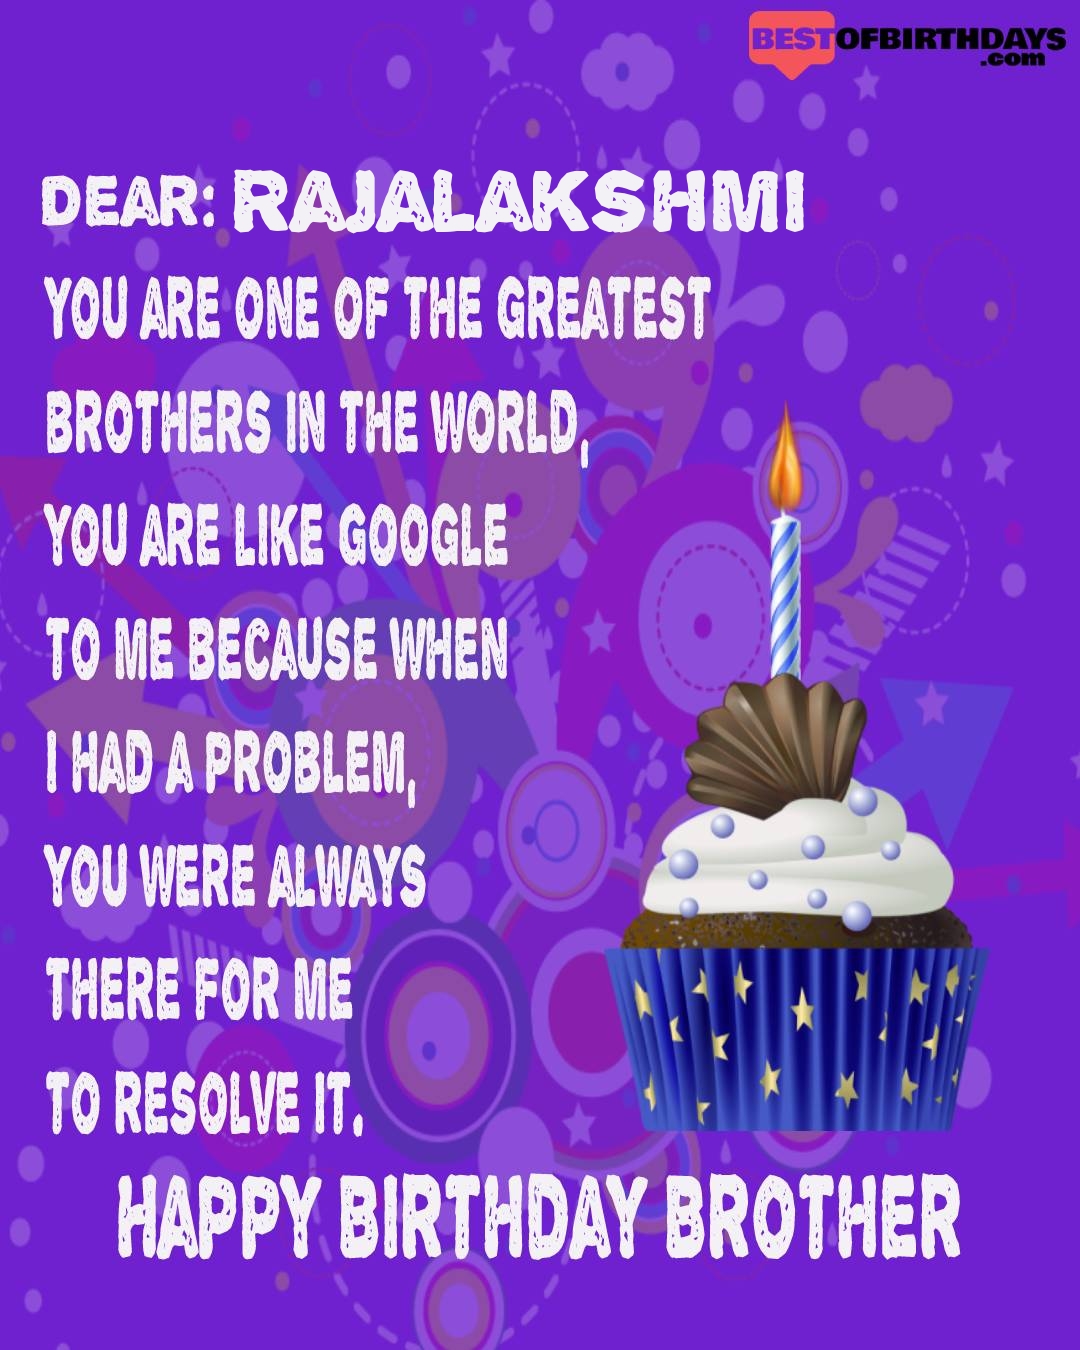 Happy birthday rajalakshmi bhai brother bro